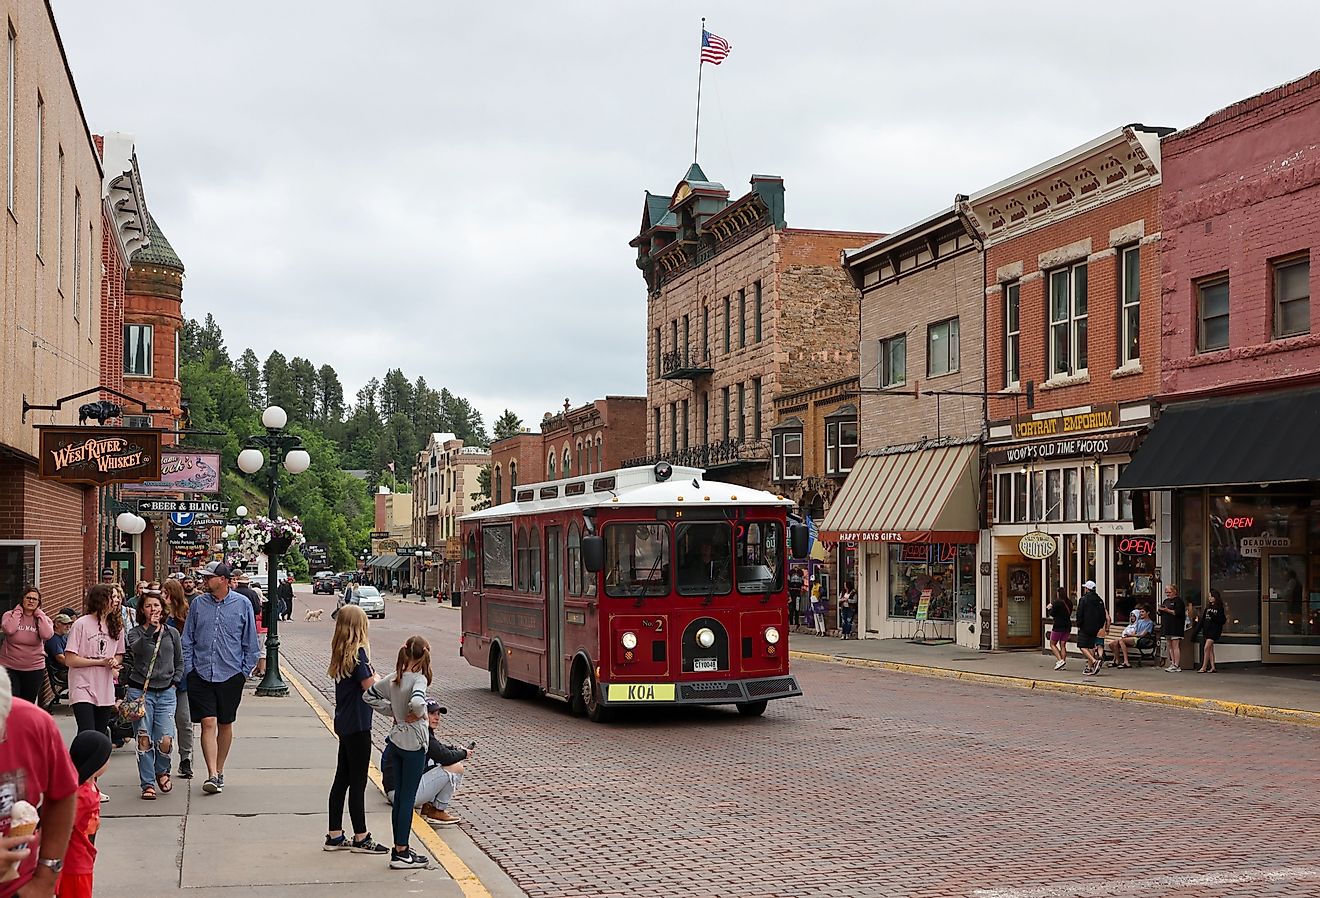 Street view of downtown Deadwood, South Dakota. Image credit Bo Shen via Shutterstock